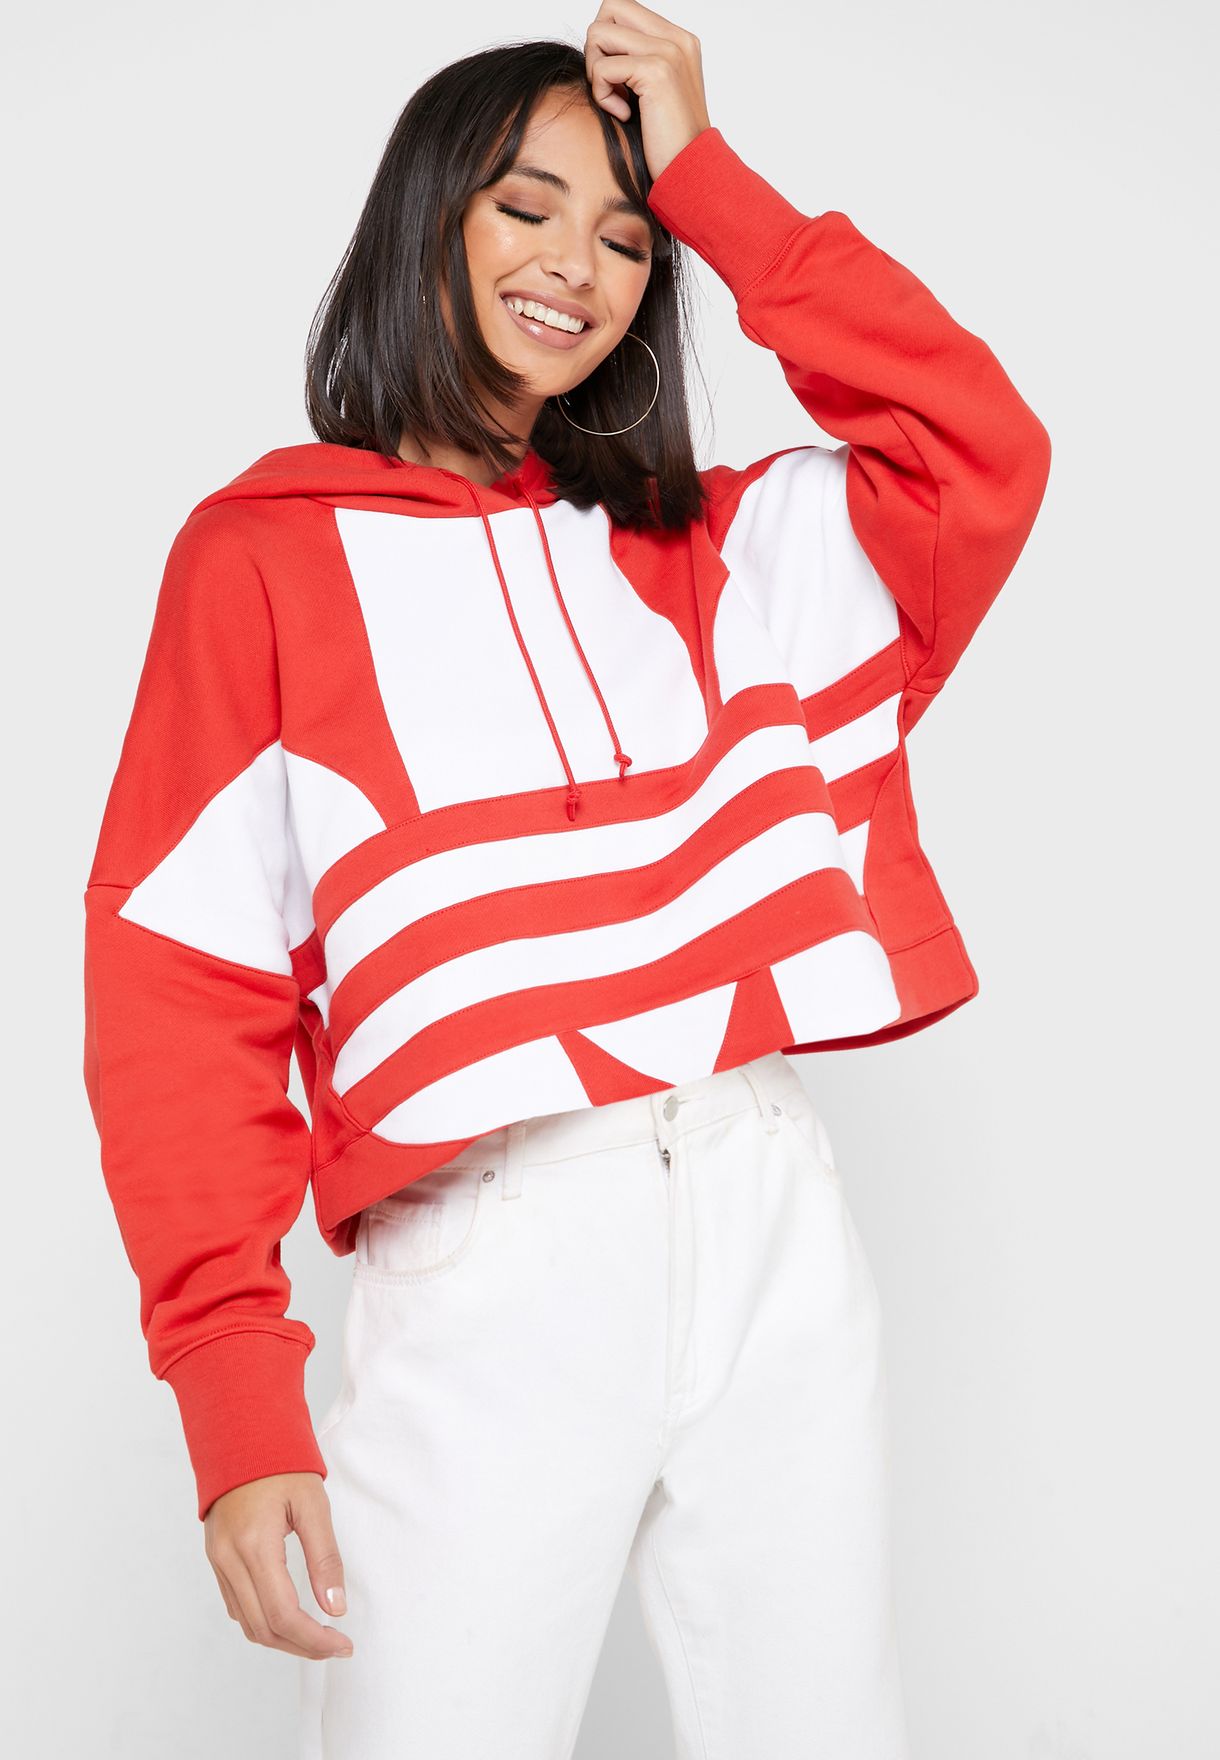 red cropped adidas hoodie